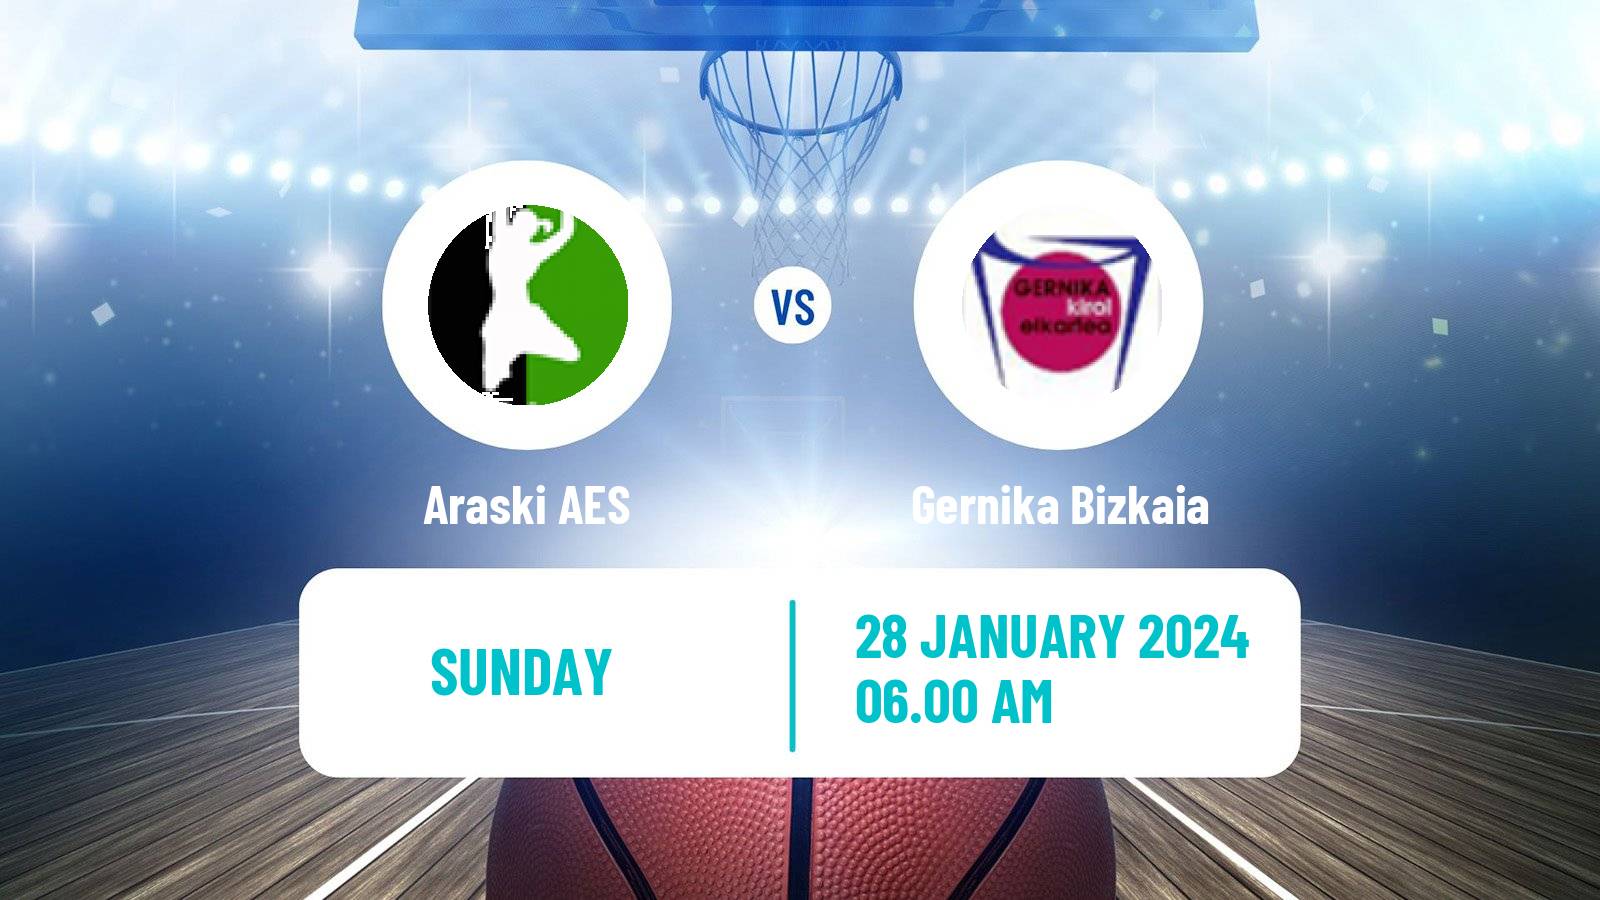 Basketball Spanish Liga Femenina Basketball Araski AES - Gernika Bizkaia